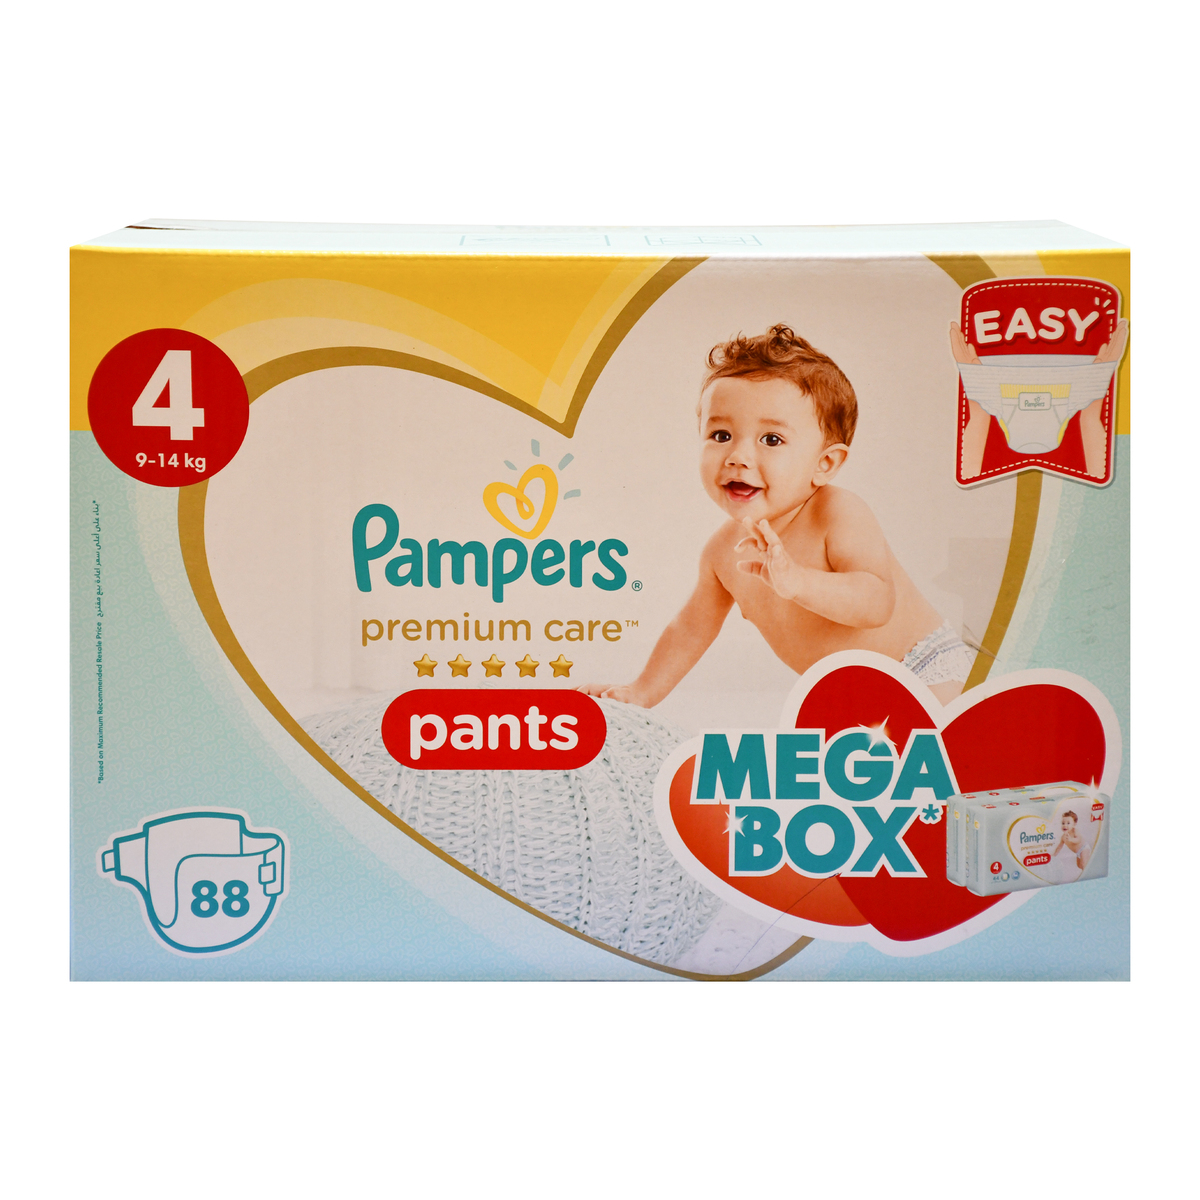 Pampers Diaper Pants Size 4 9-14kg Mega Box 88 pcs